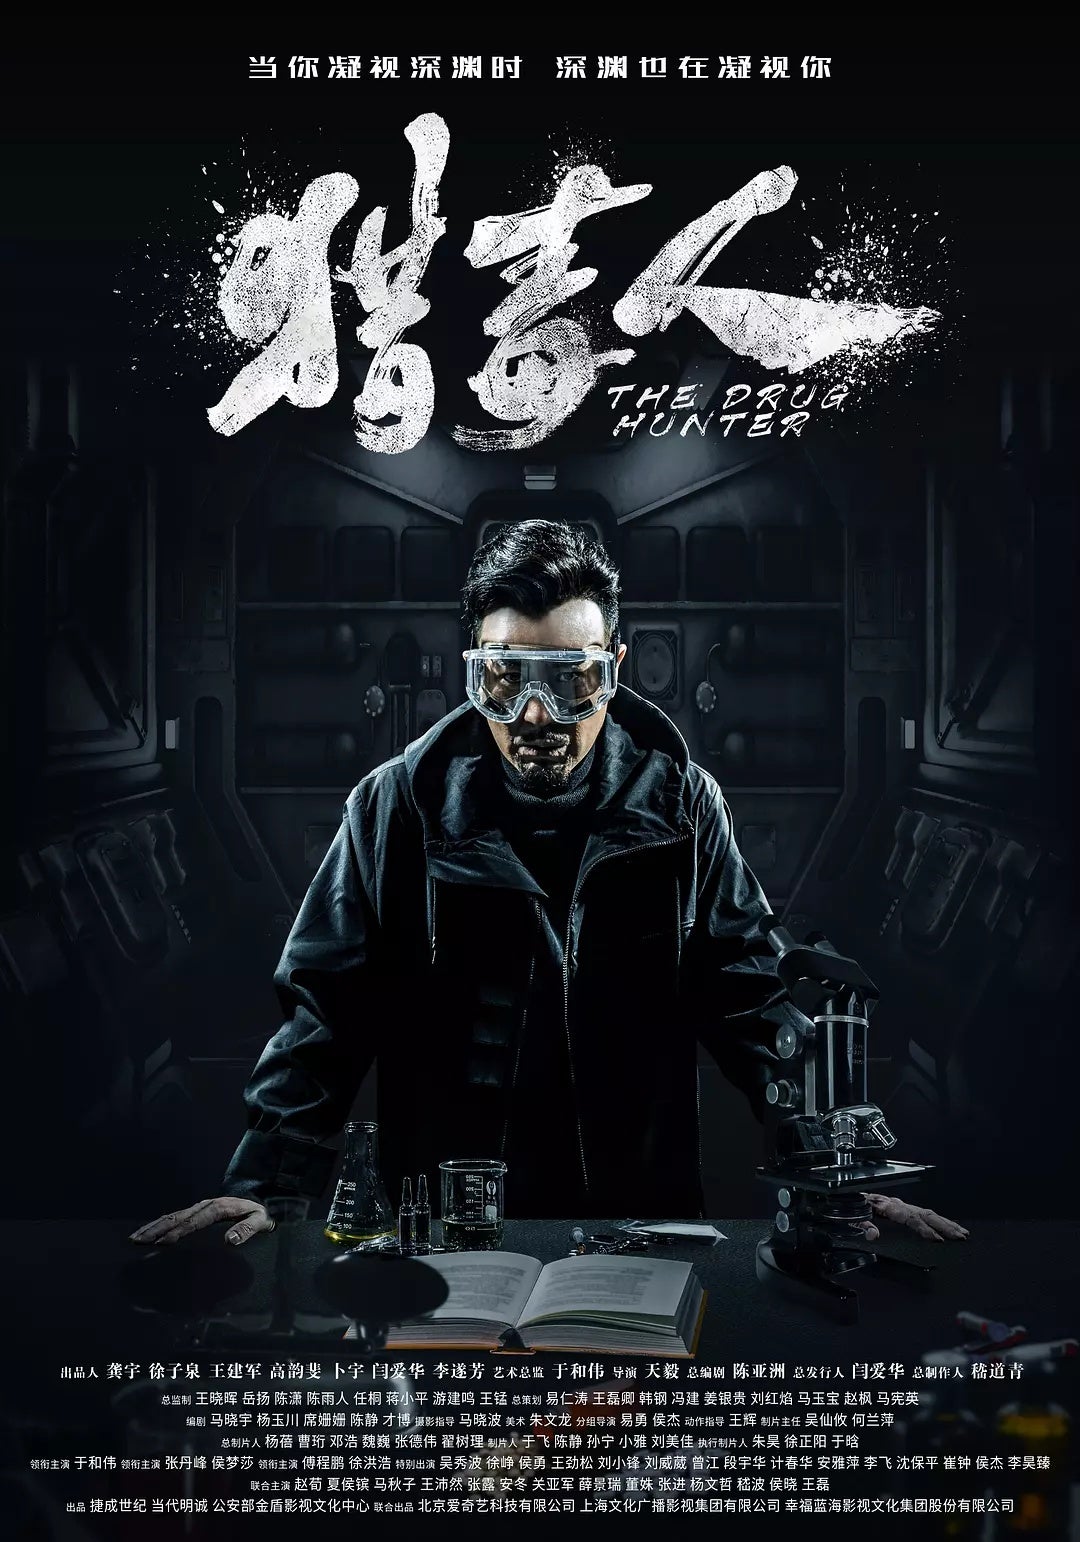 TV ratings for The Drug Hunter (猎毒人) in Poland. Jiangsu Television TV series